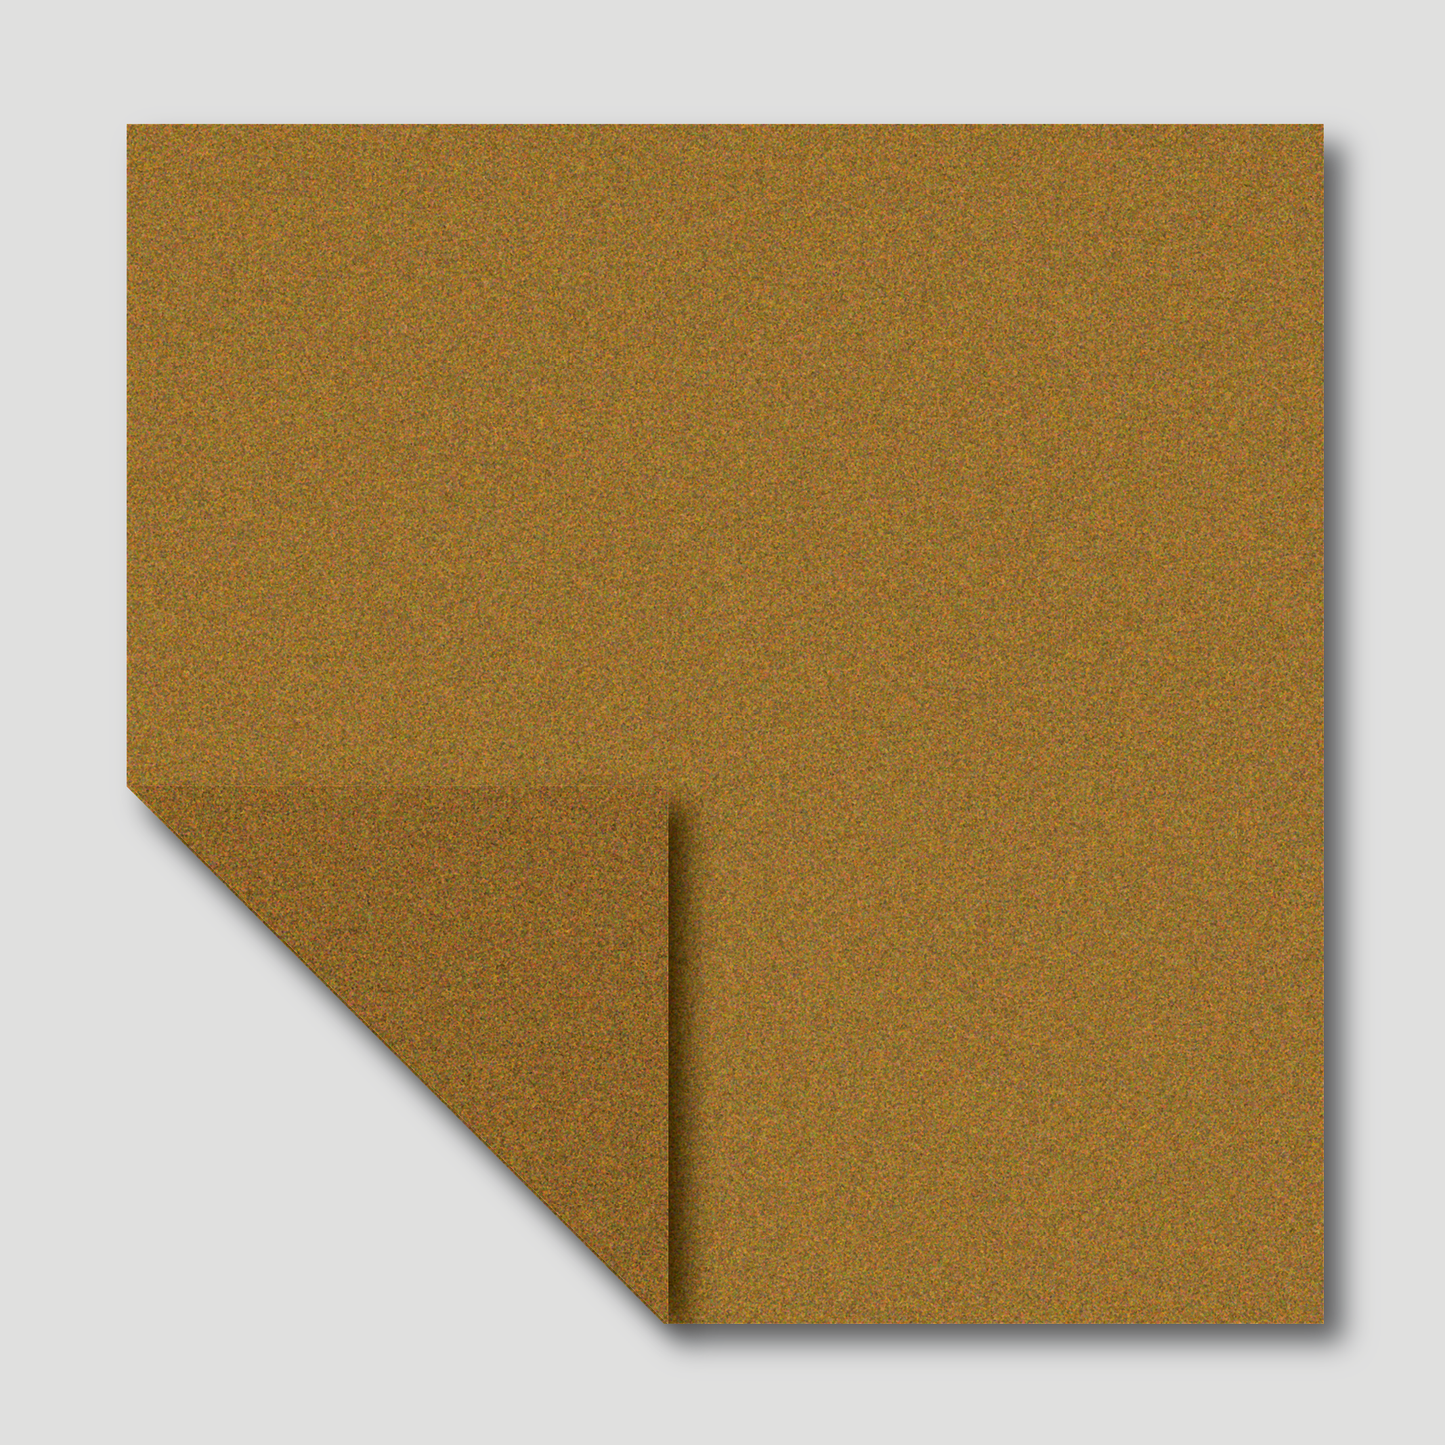 【Taro's Origami Studio】ビオトープ ジャンボ 13.75インチ/35cm 単色(黄土色) 10枚入(全同色) 上級フォルダー用高級和紙(日本製)